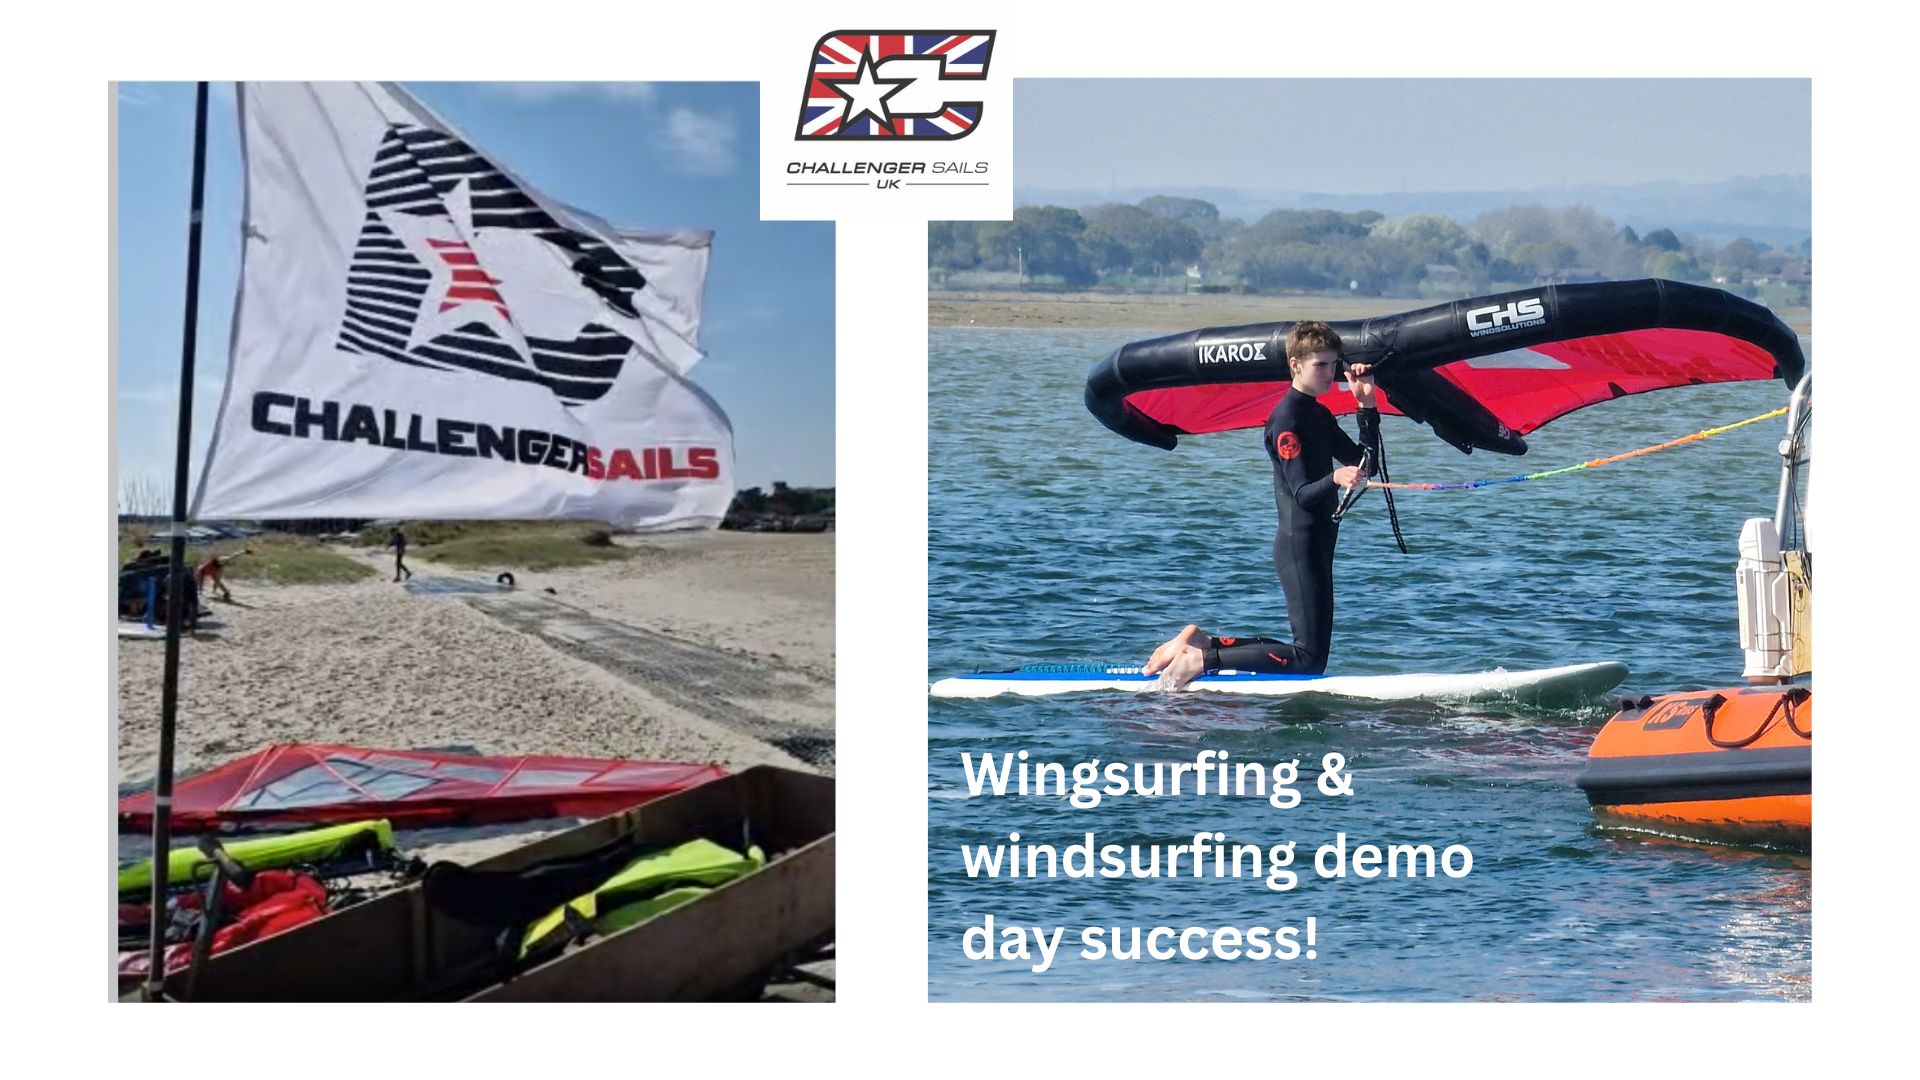 Wingsurfing & windsurfing demo day success!